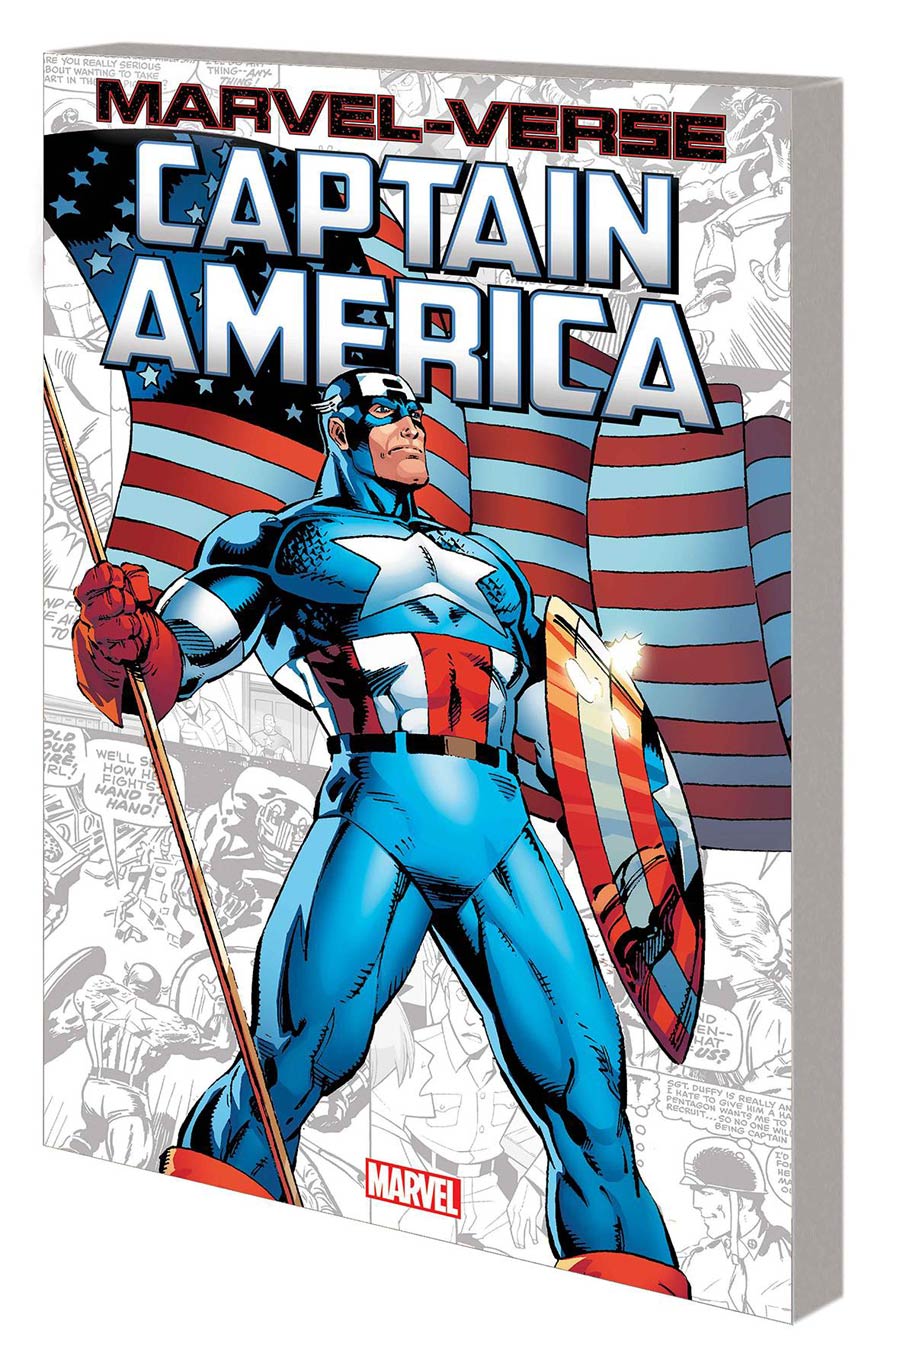 Marvel-Verse Captain America GN